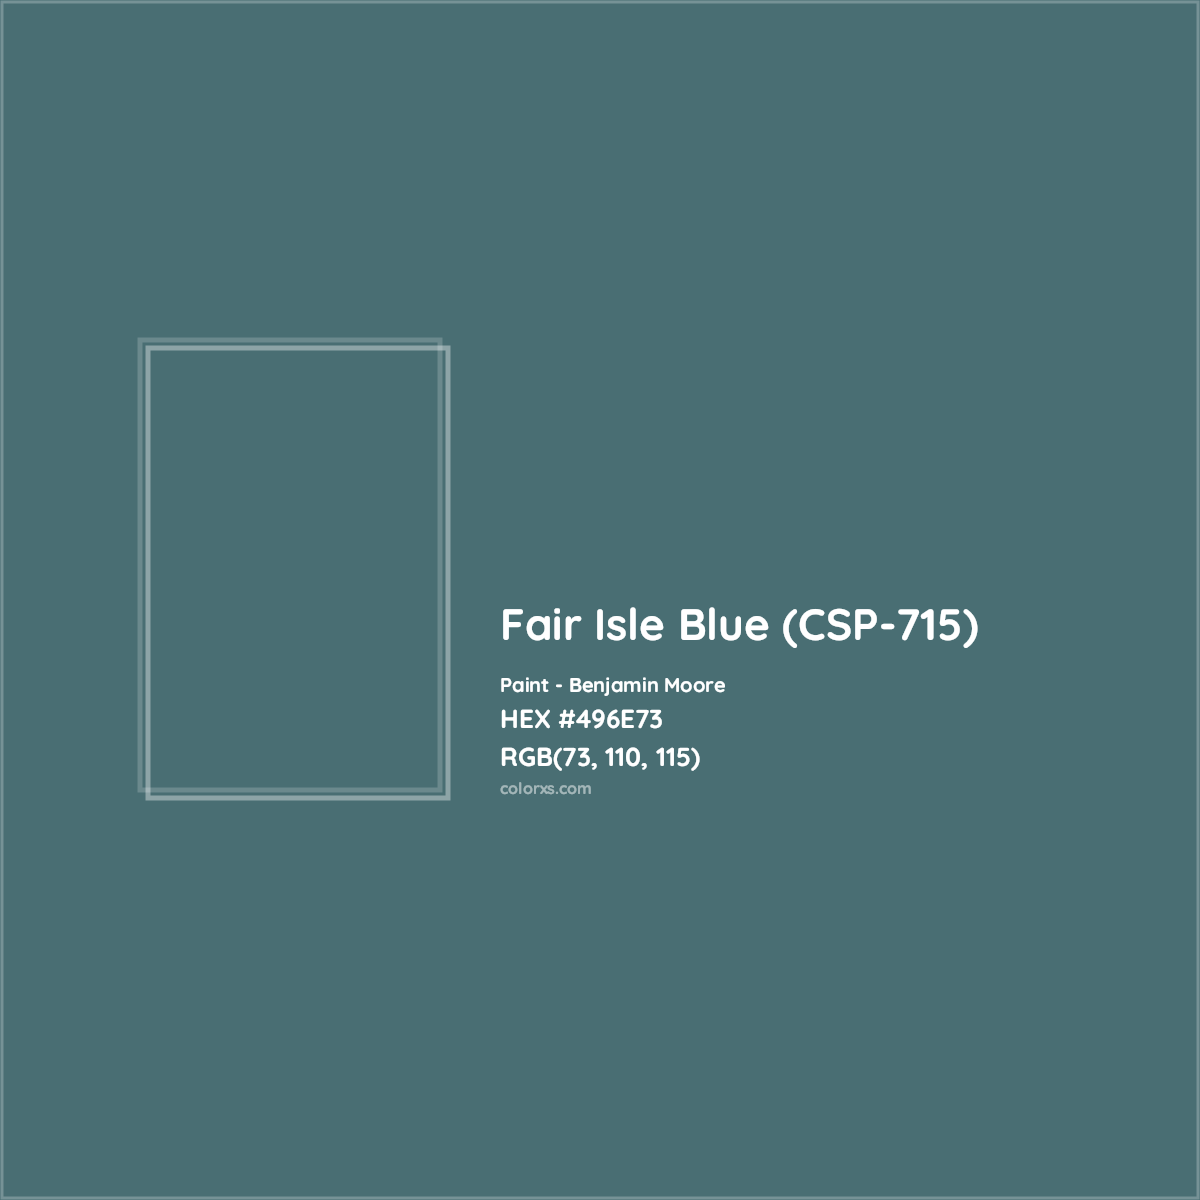 HEX #496E73 Fair Isle Blue (CSP-715) Paint Benjamin Moore - Color Code